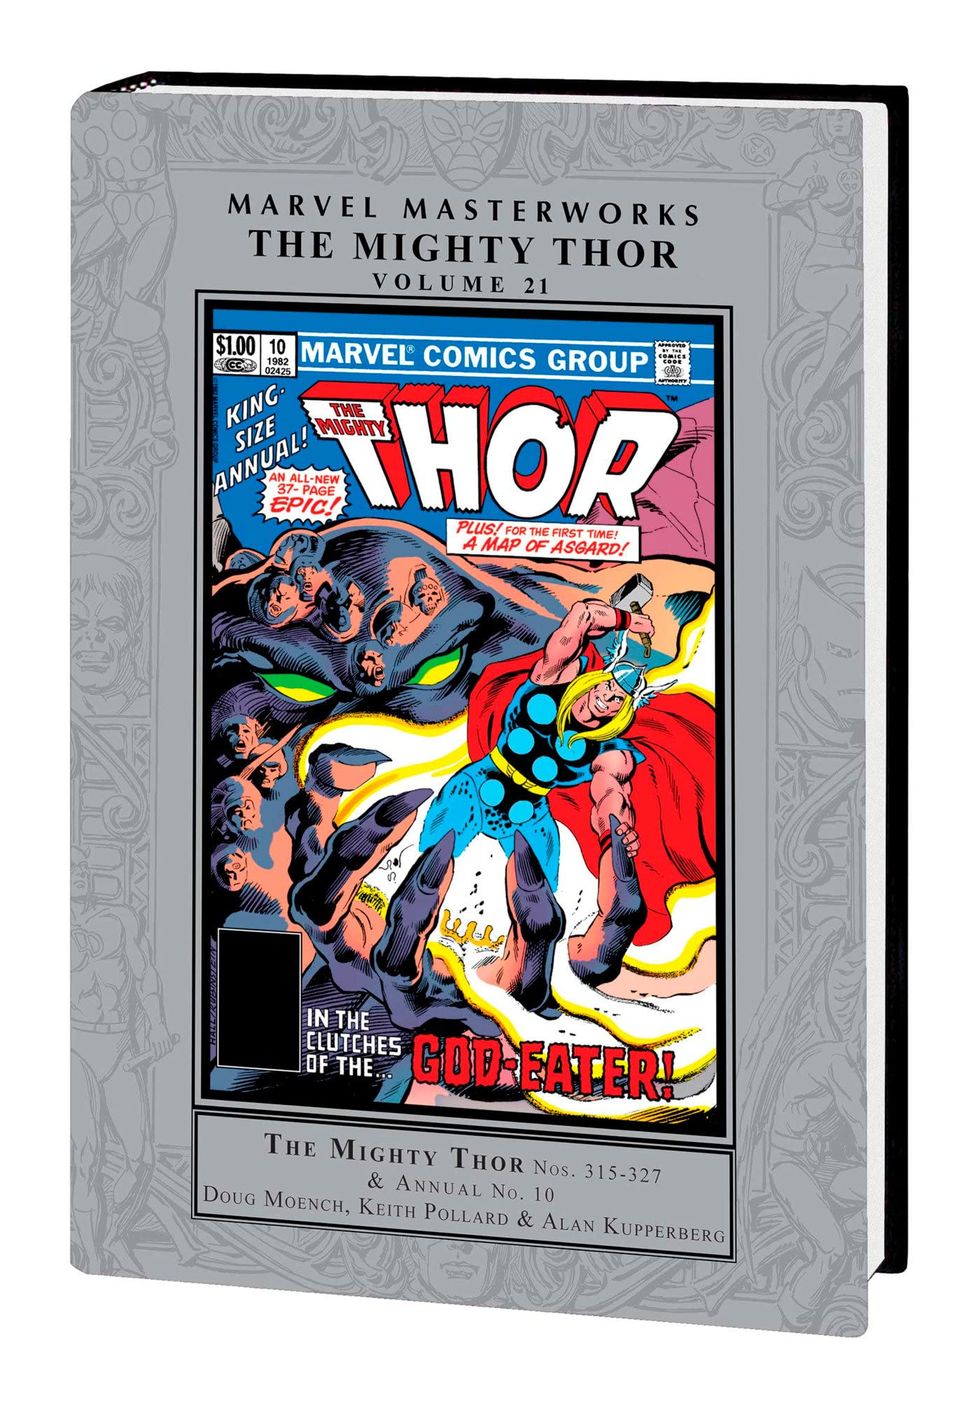 MARVEL MASTERWORKS: THE MIGHTY THOR VOL. 21 (Marvel Masterworks: the Mighty Thor, 21)